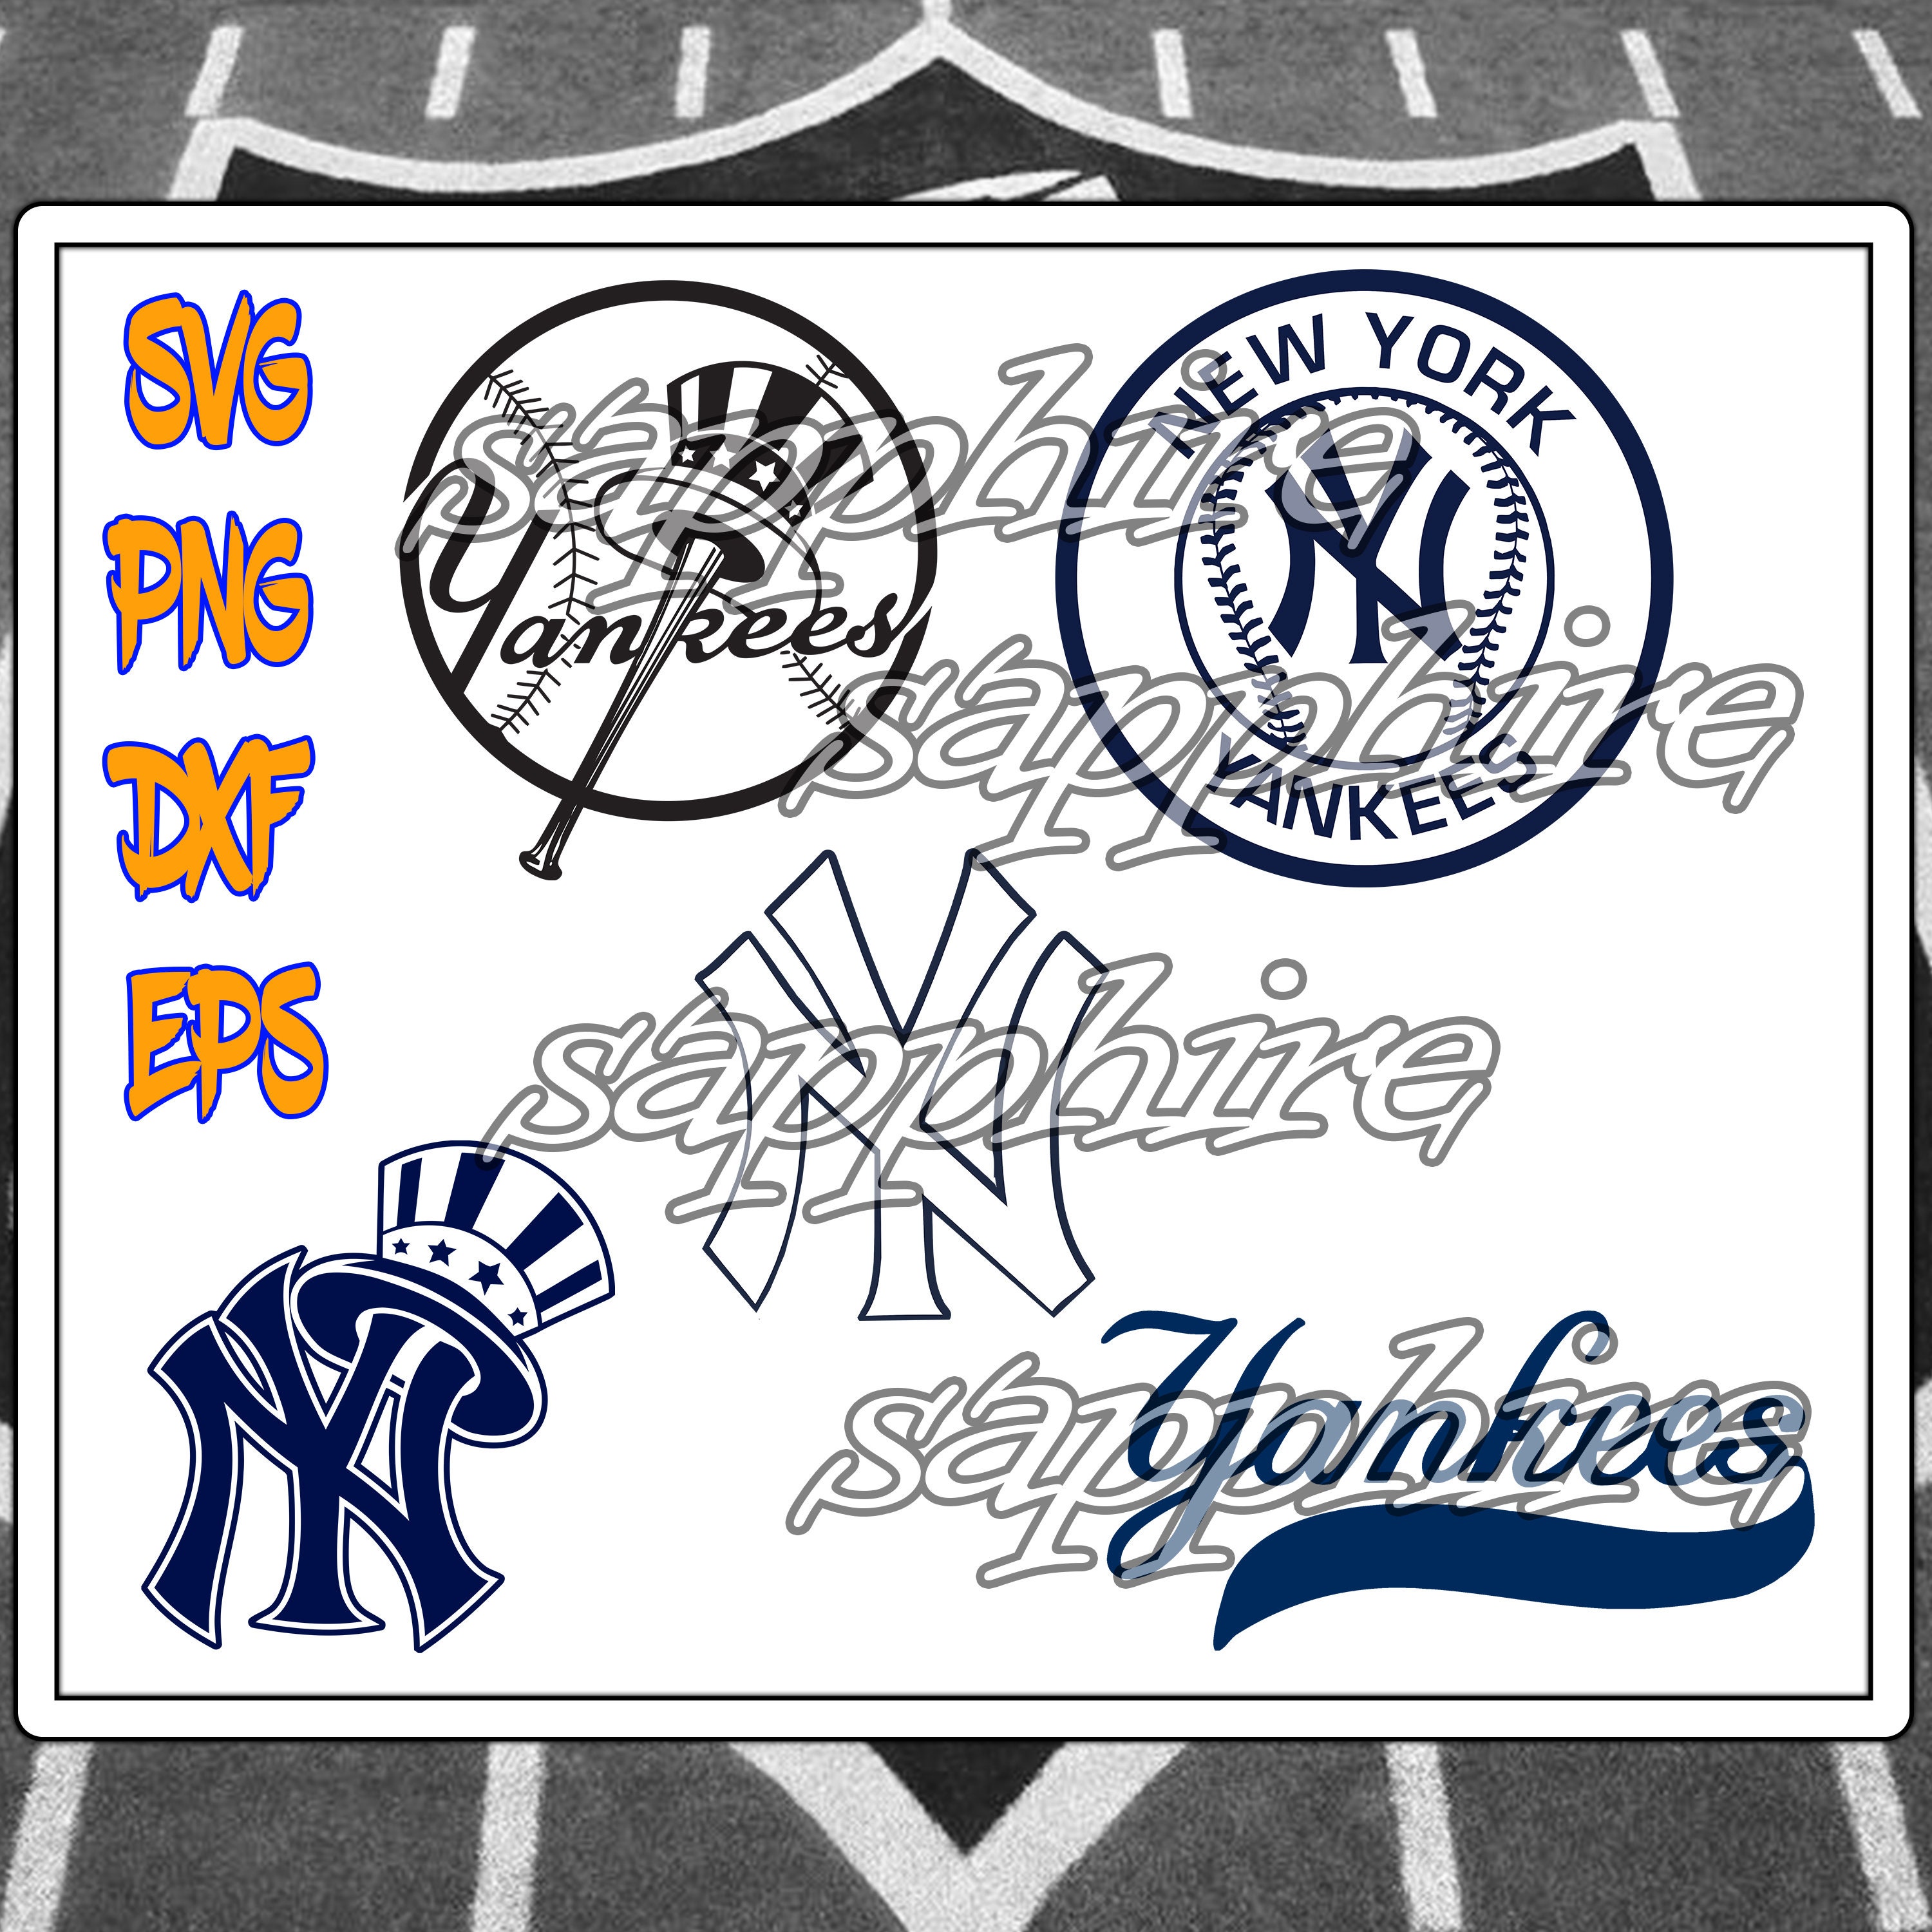 New York Yankees Logo PNG Transparent & SVG Vector - Freebie Supply 